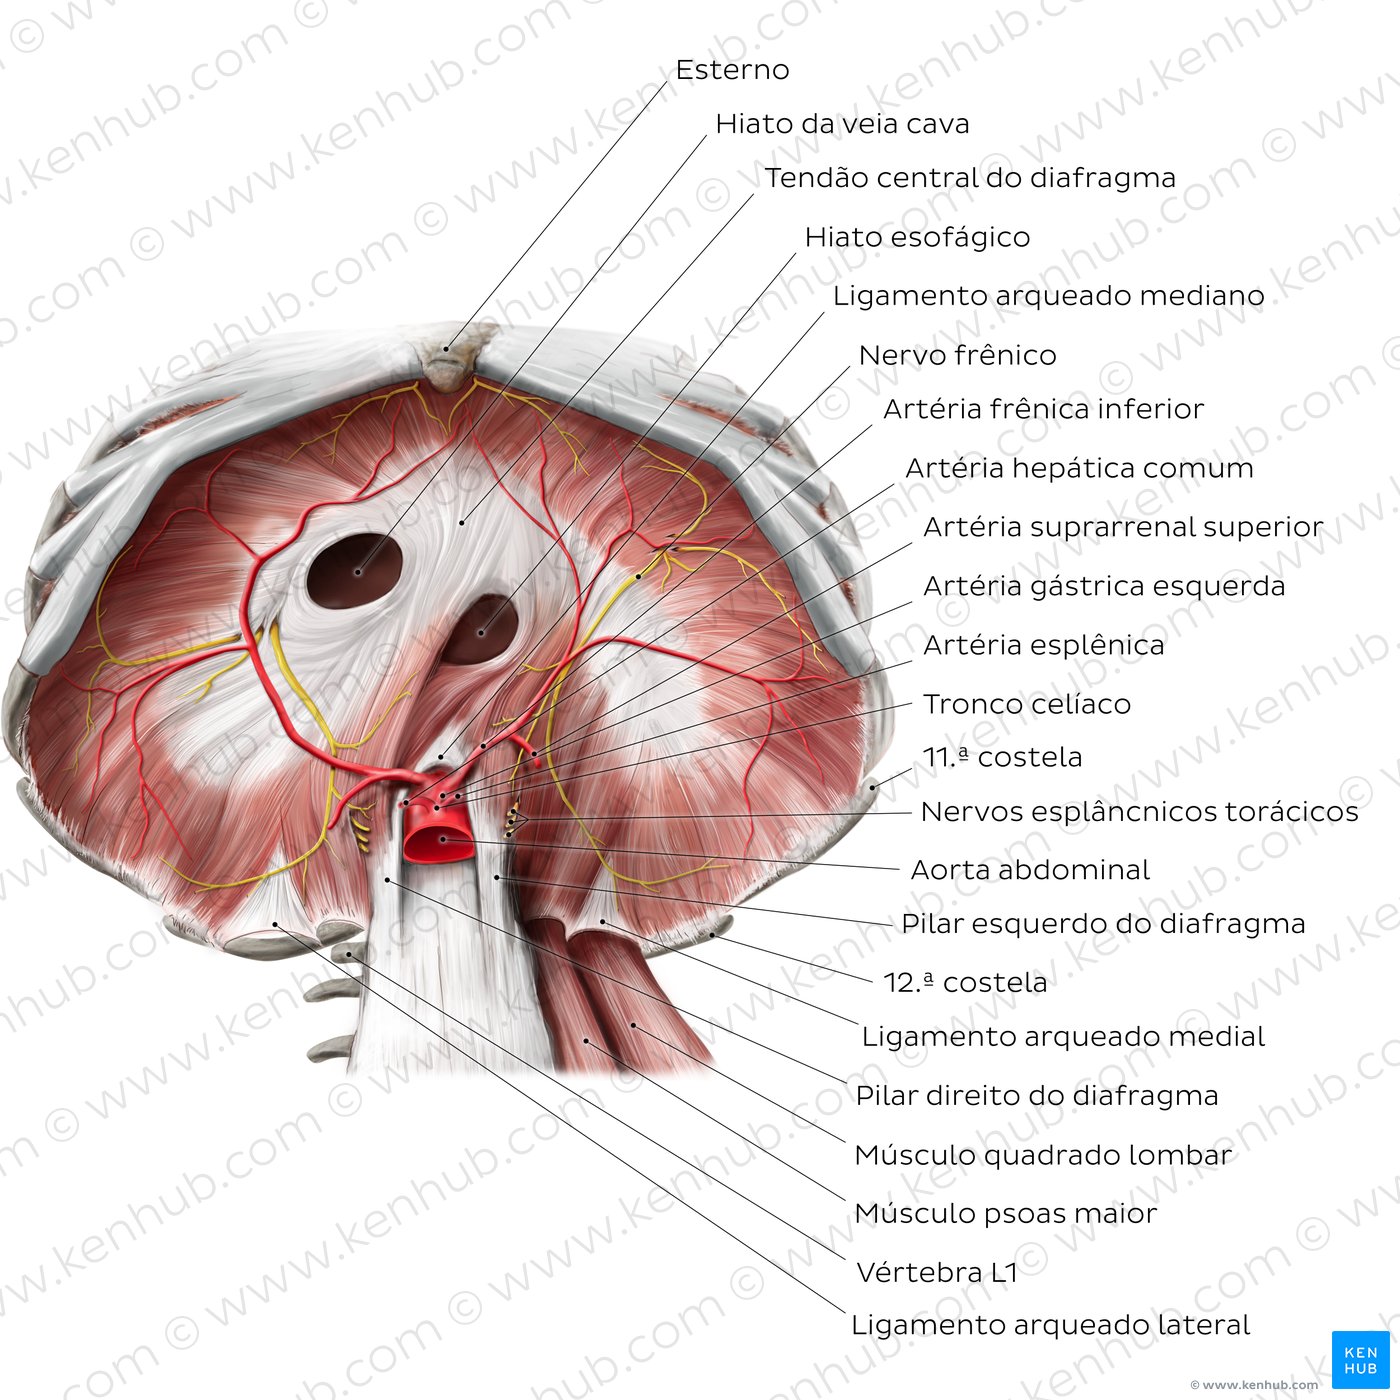 Superfície abdominal do diafragma - visão geral